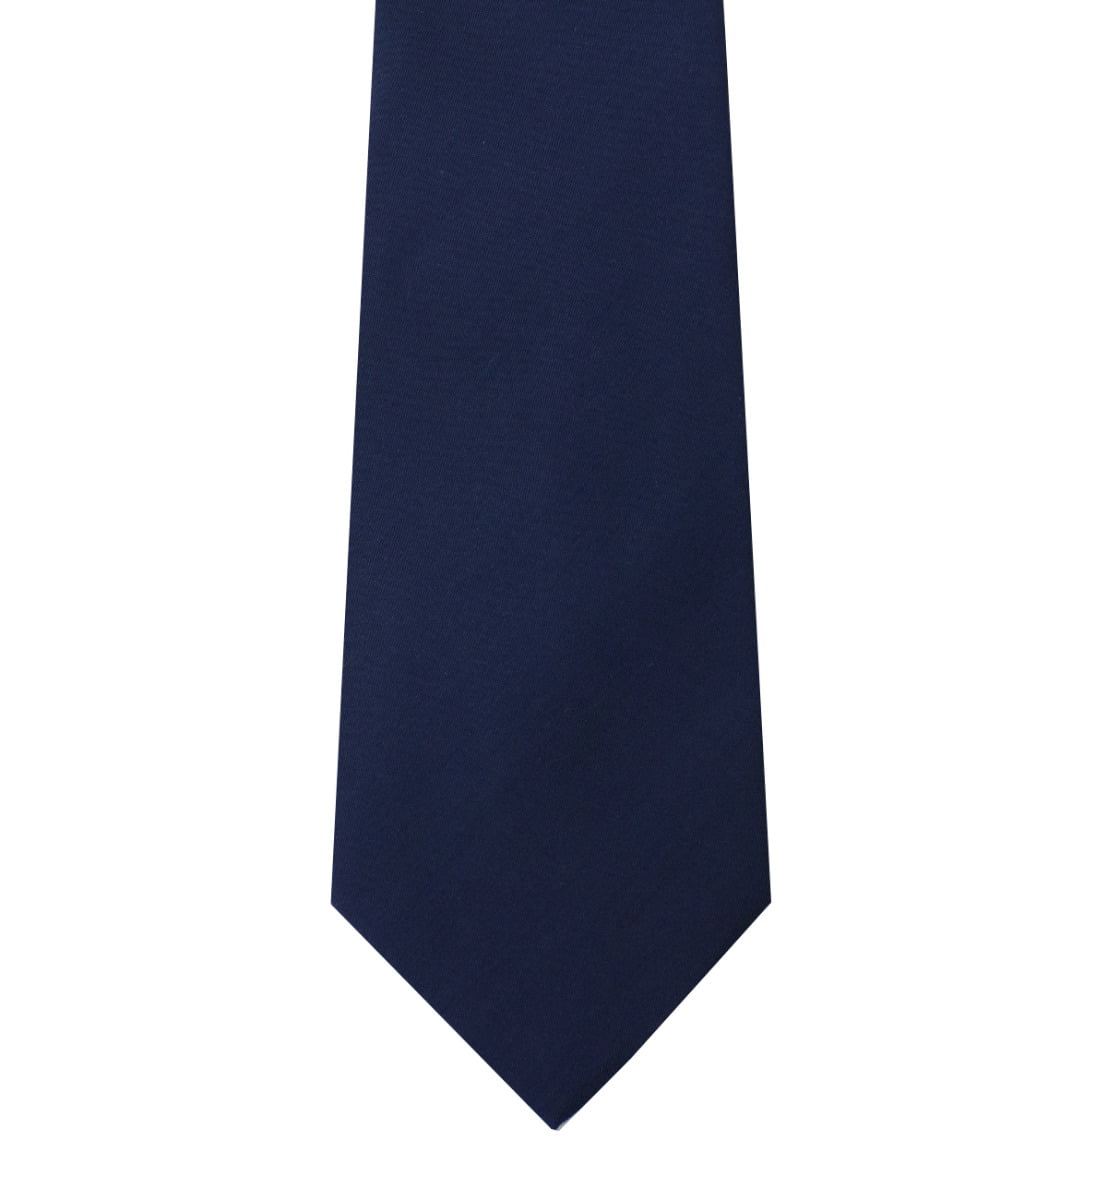 Cravatta uomo royal blu in seta tinta unita larghezza 8cm made in italy